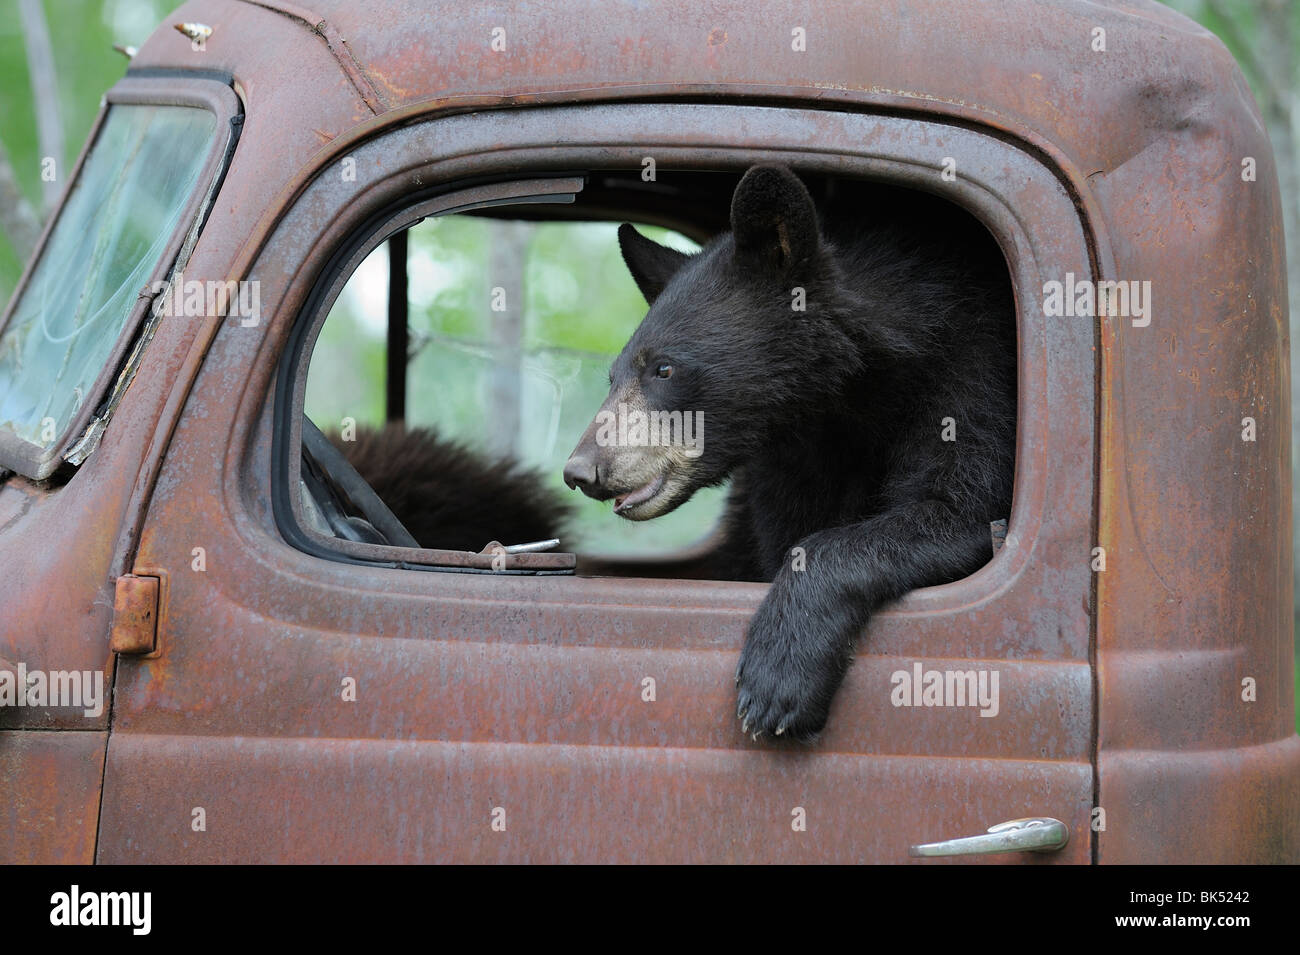 Black Bear in Old Truck, Minnesota, USA Stock Photo